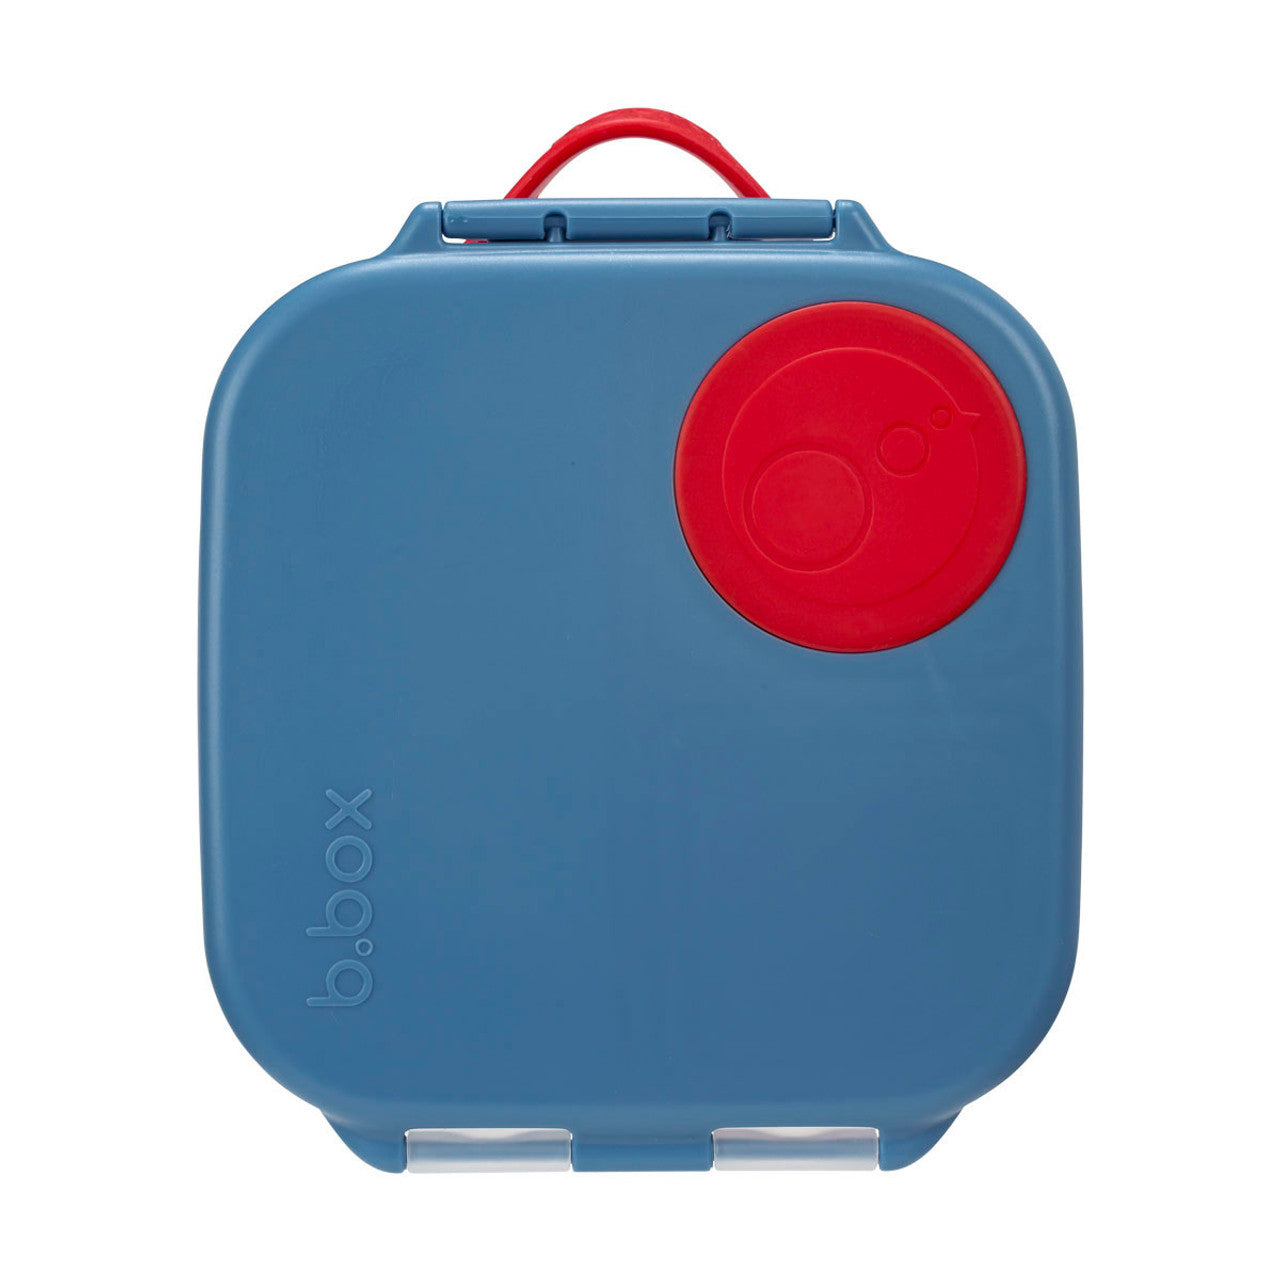 Mini Lunchbox in Blue Blaze by b.box